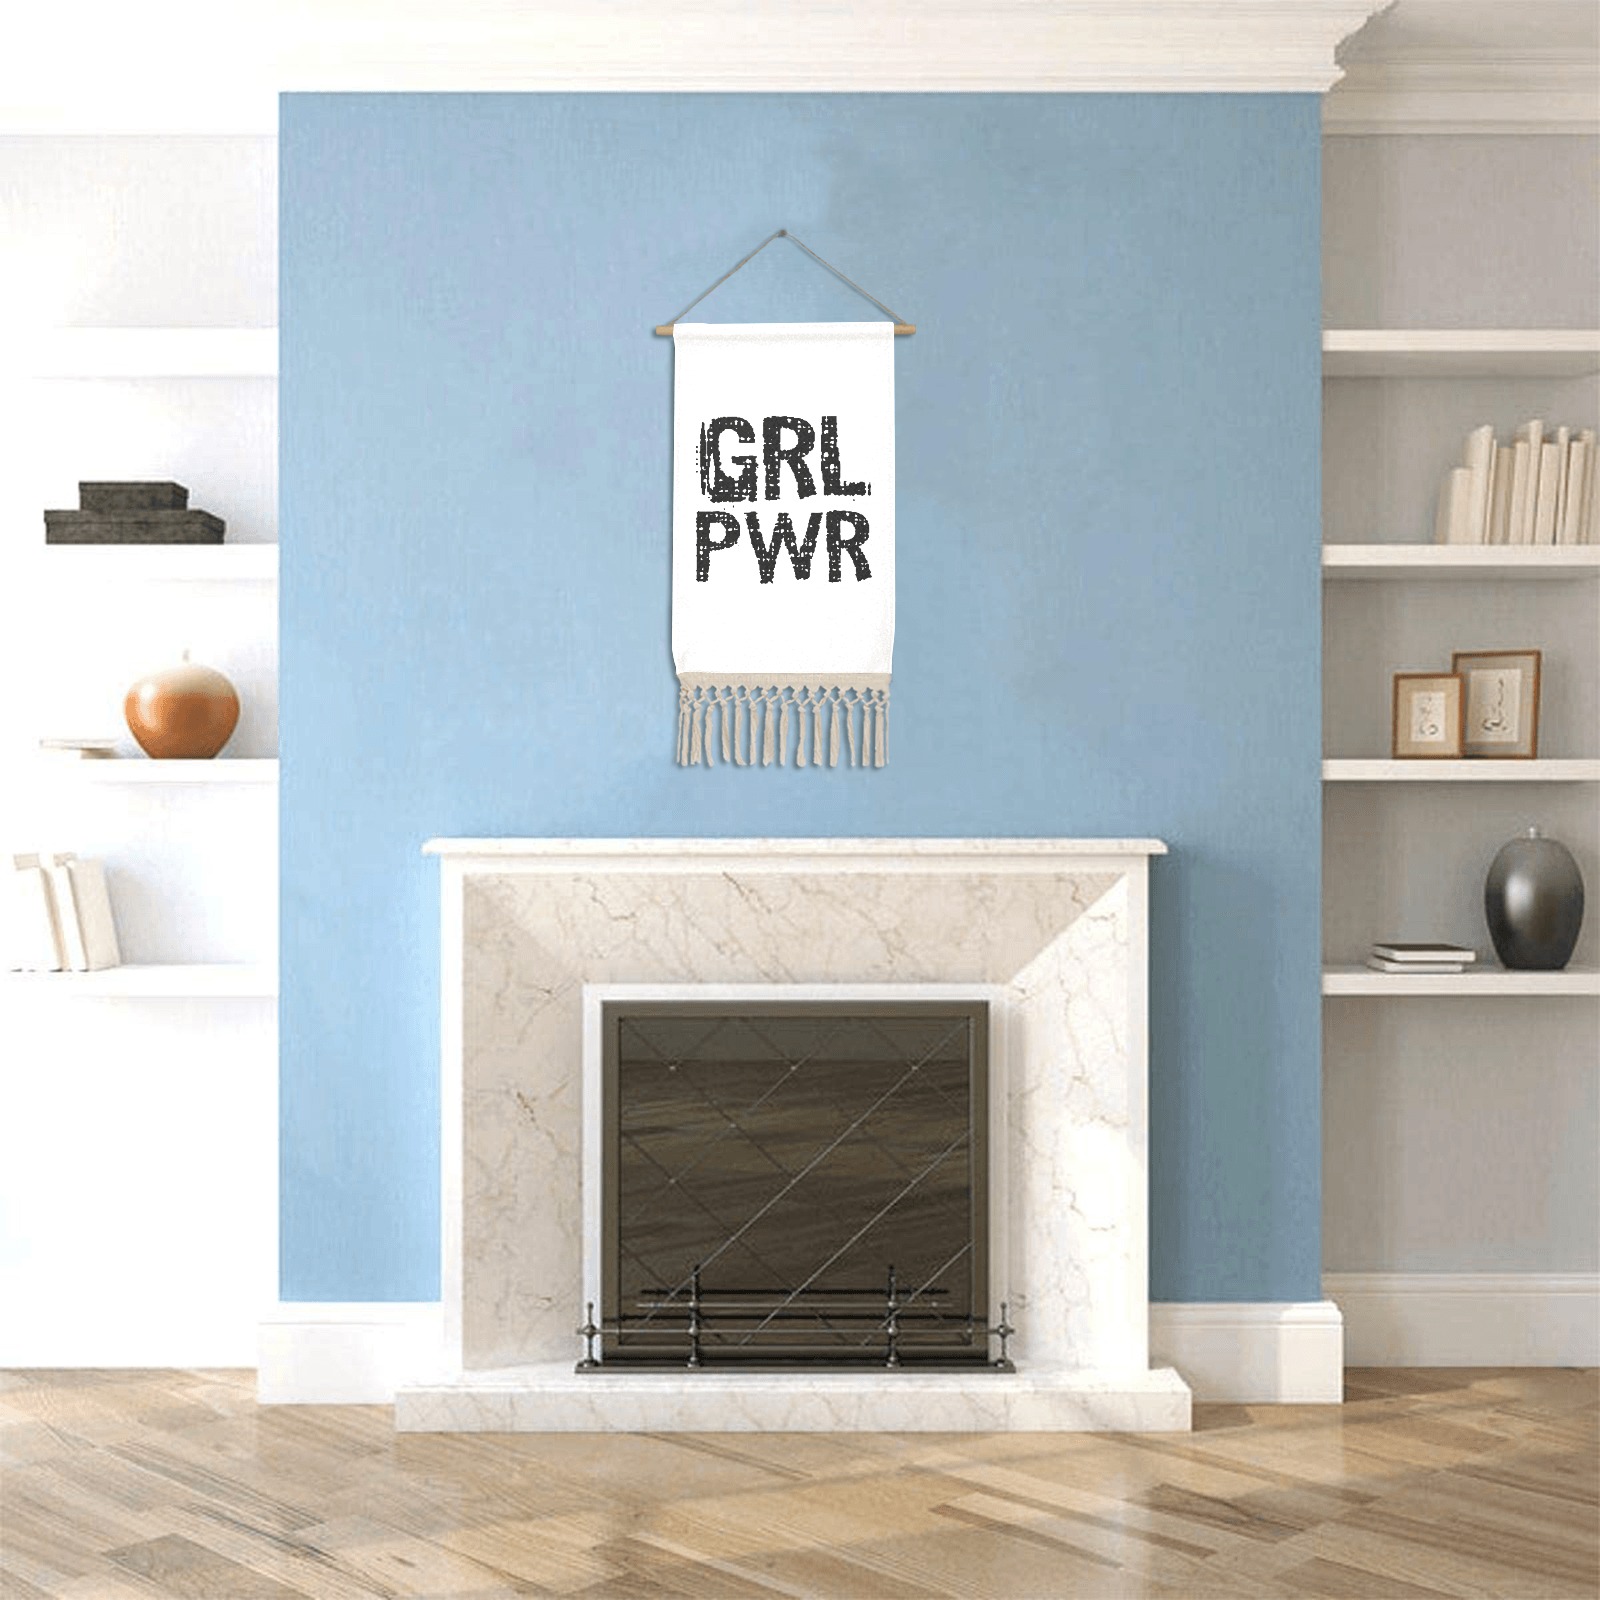 GRL PWR - Girl Power elegant black text. Linen Hanging Poster